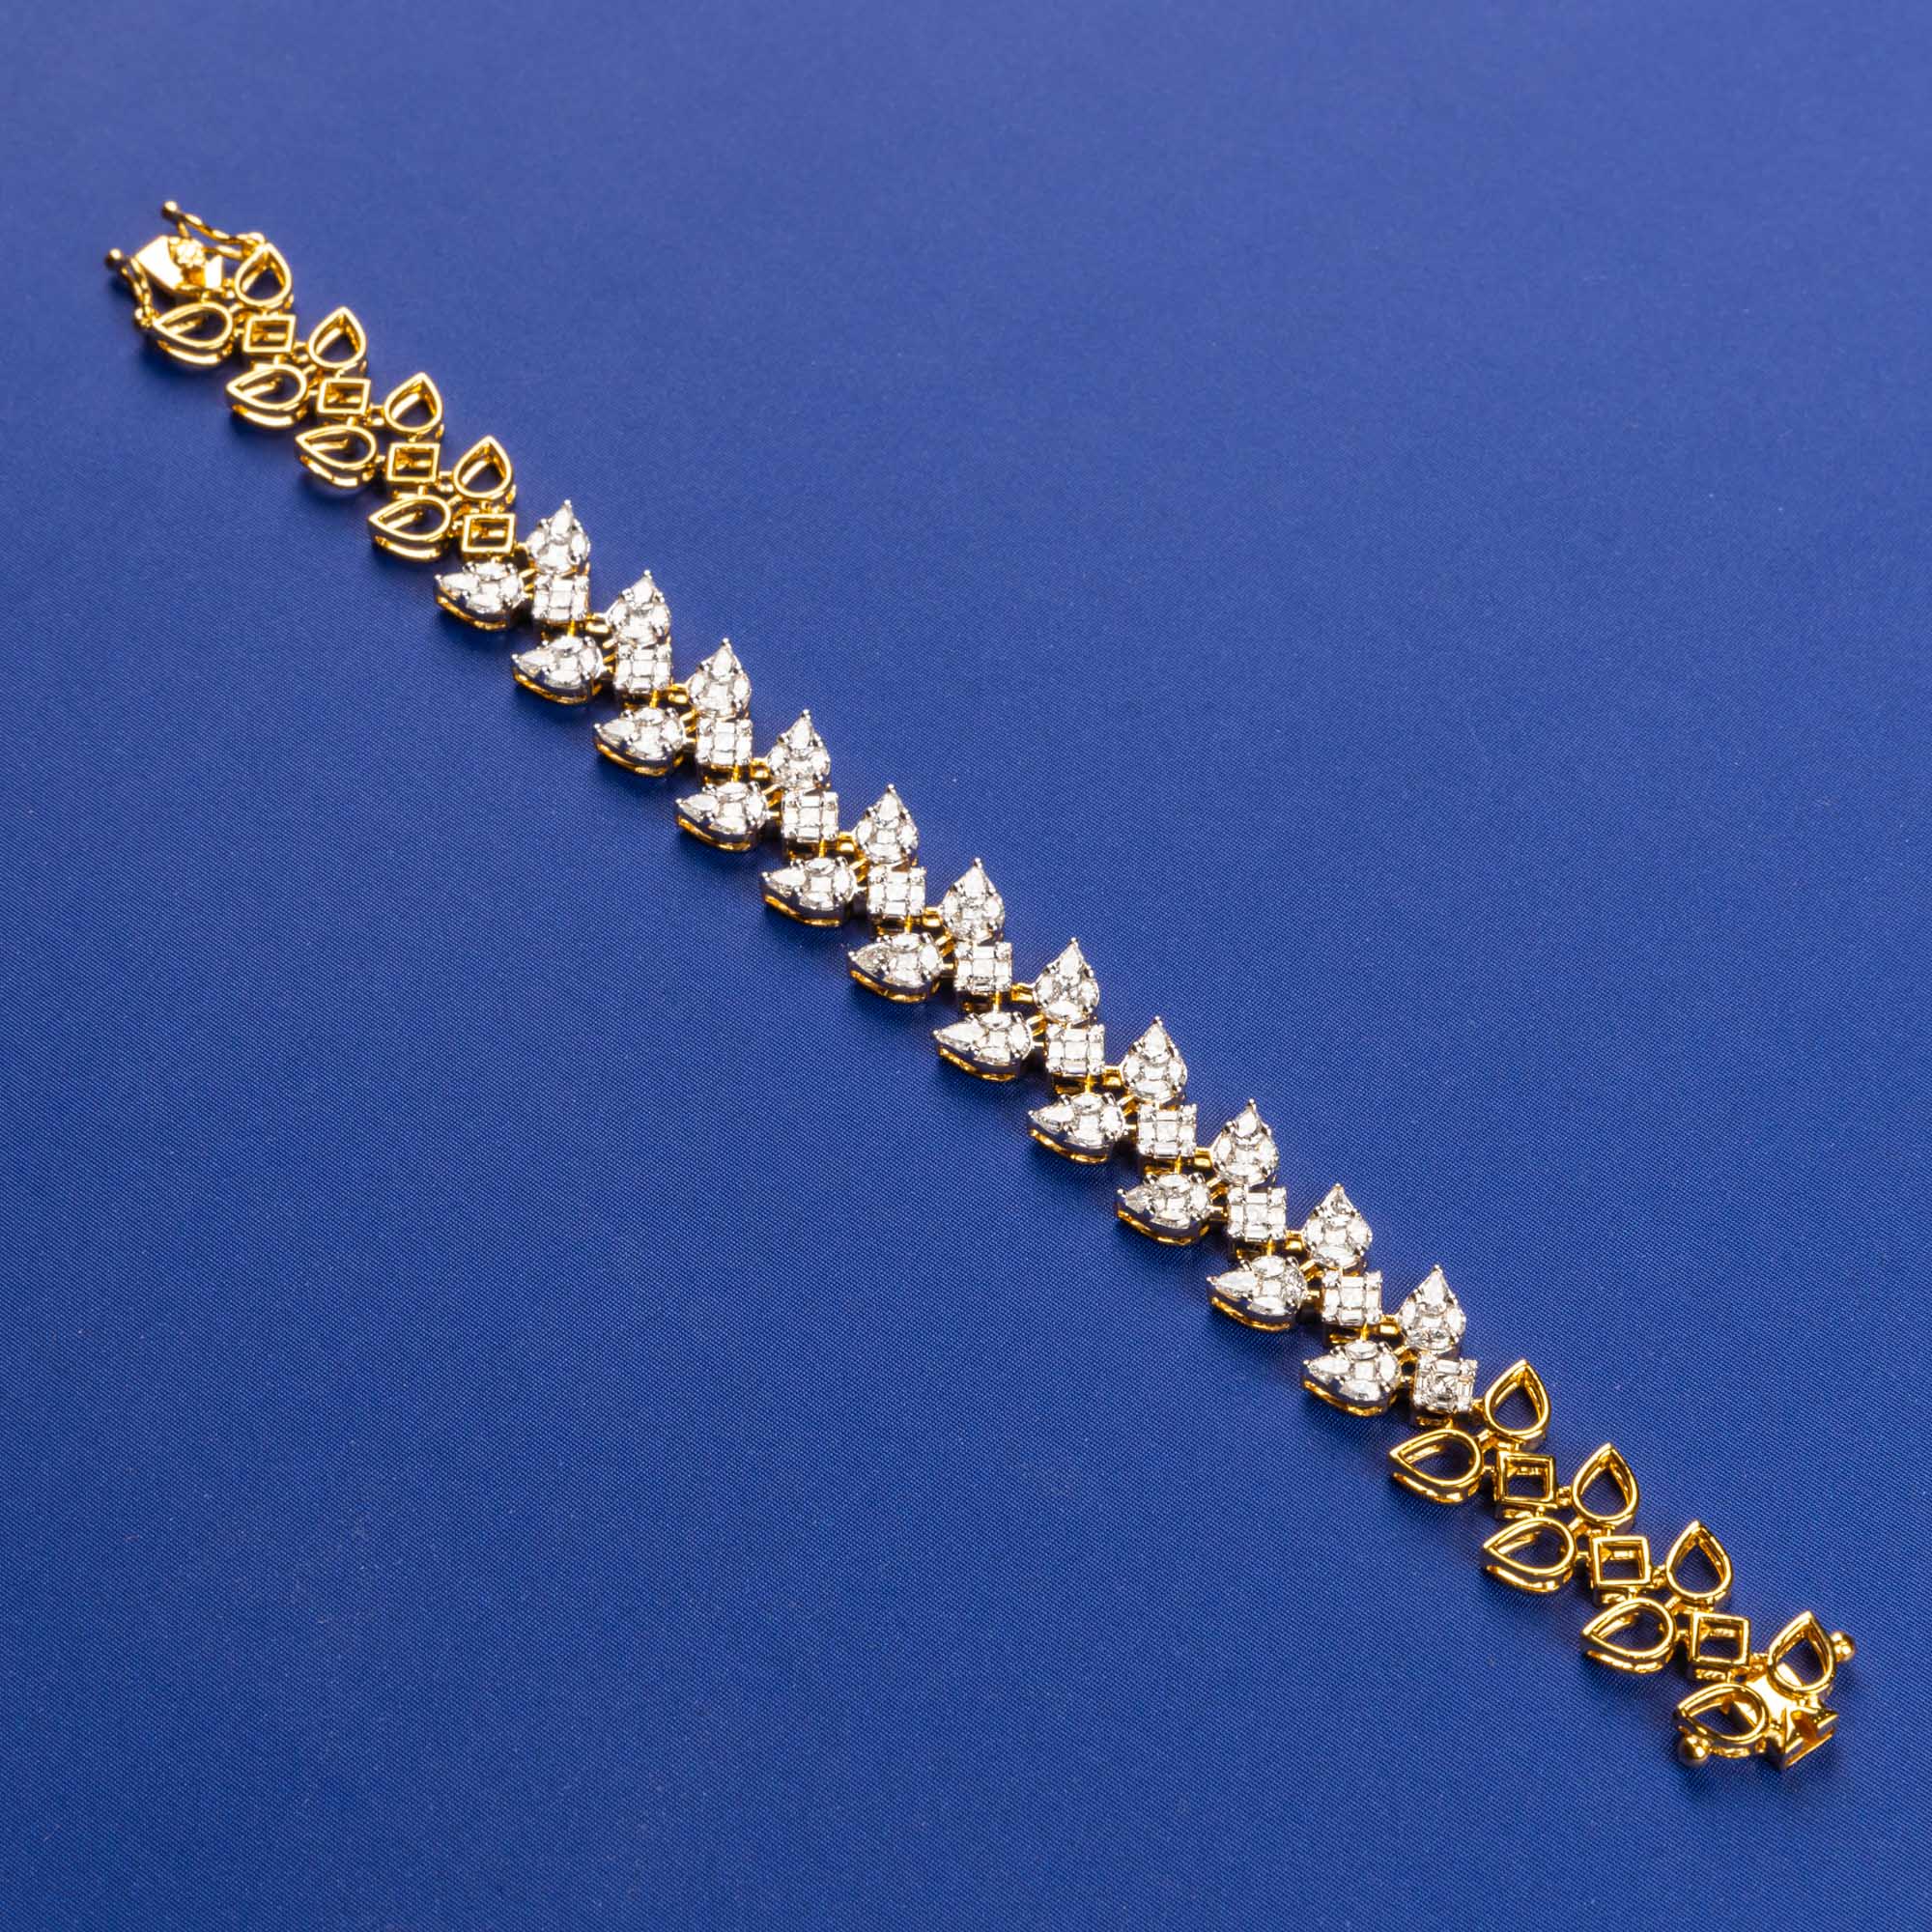  Eternal Sparkle: Handmade 18K Yellow Gold Diamond Bracelet with Timeless Brilliance